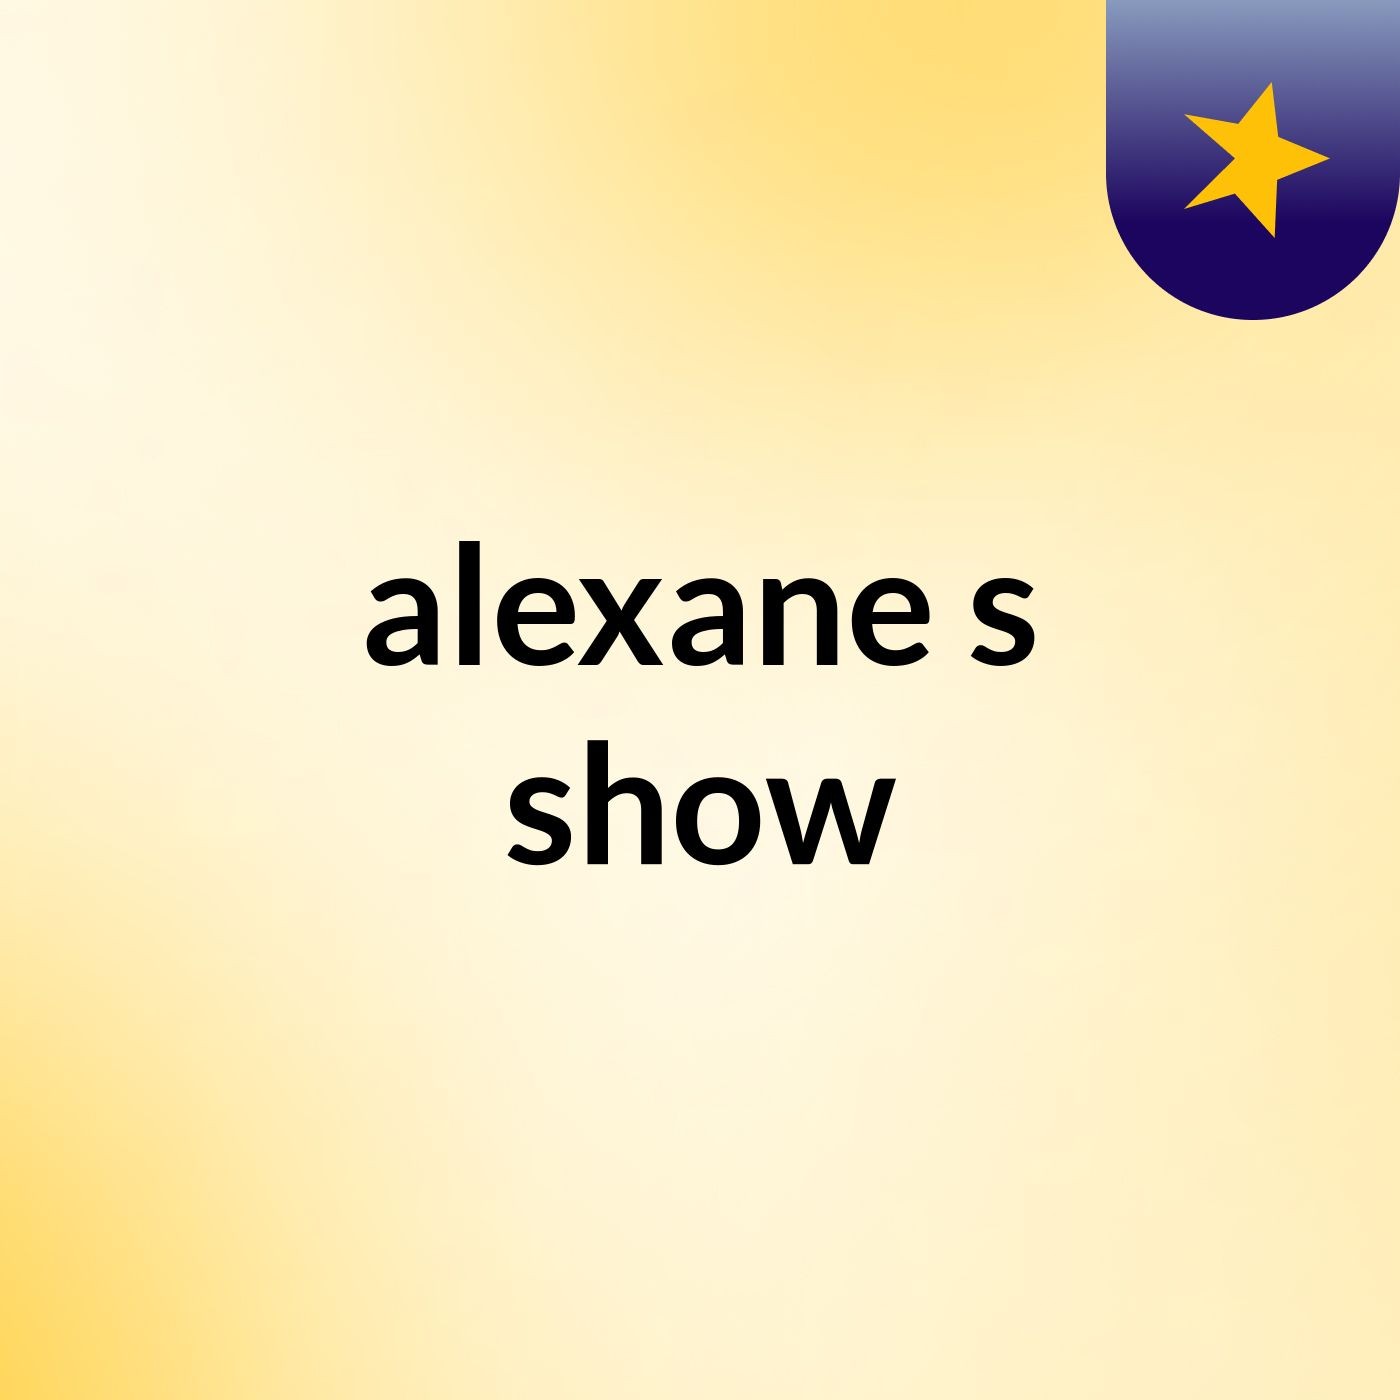 alexane's show